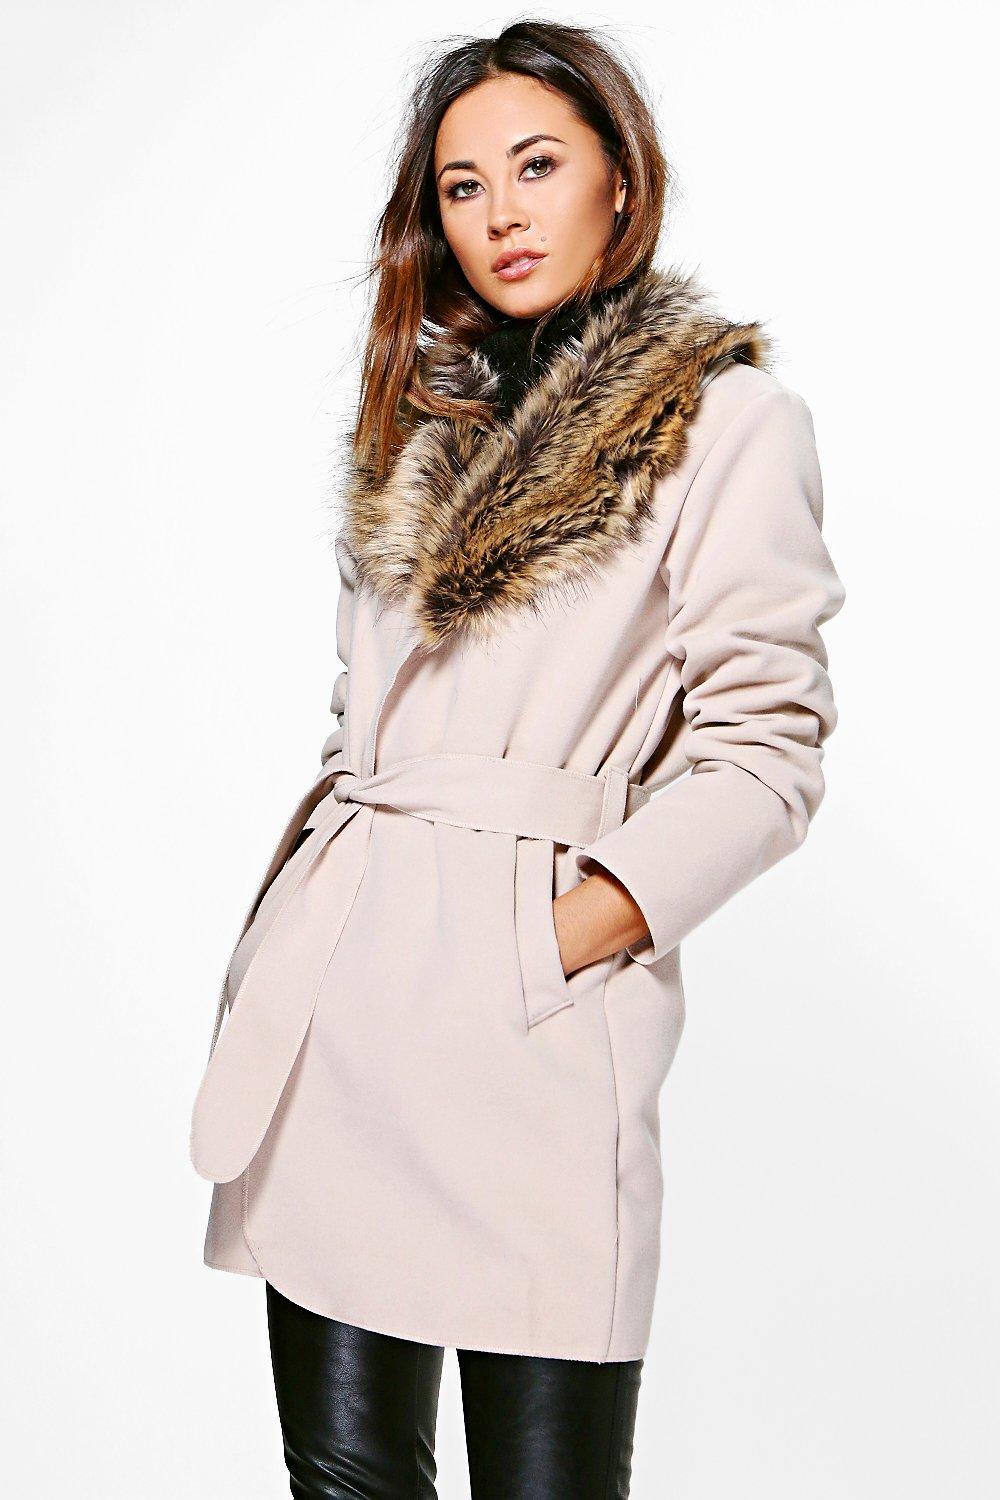 winter coats size 3x